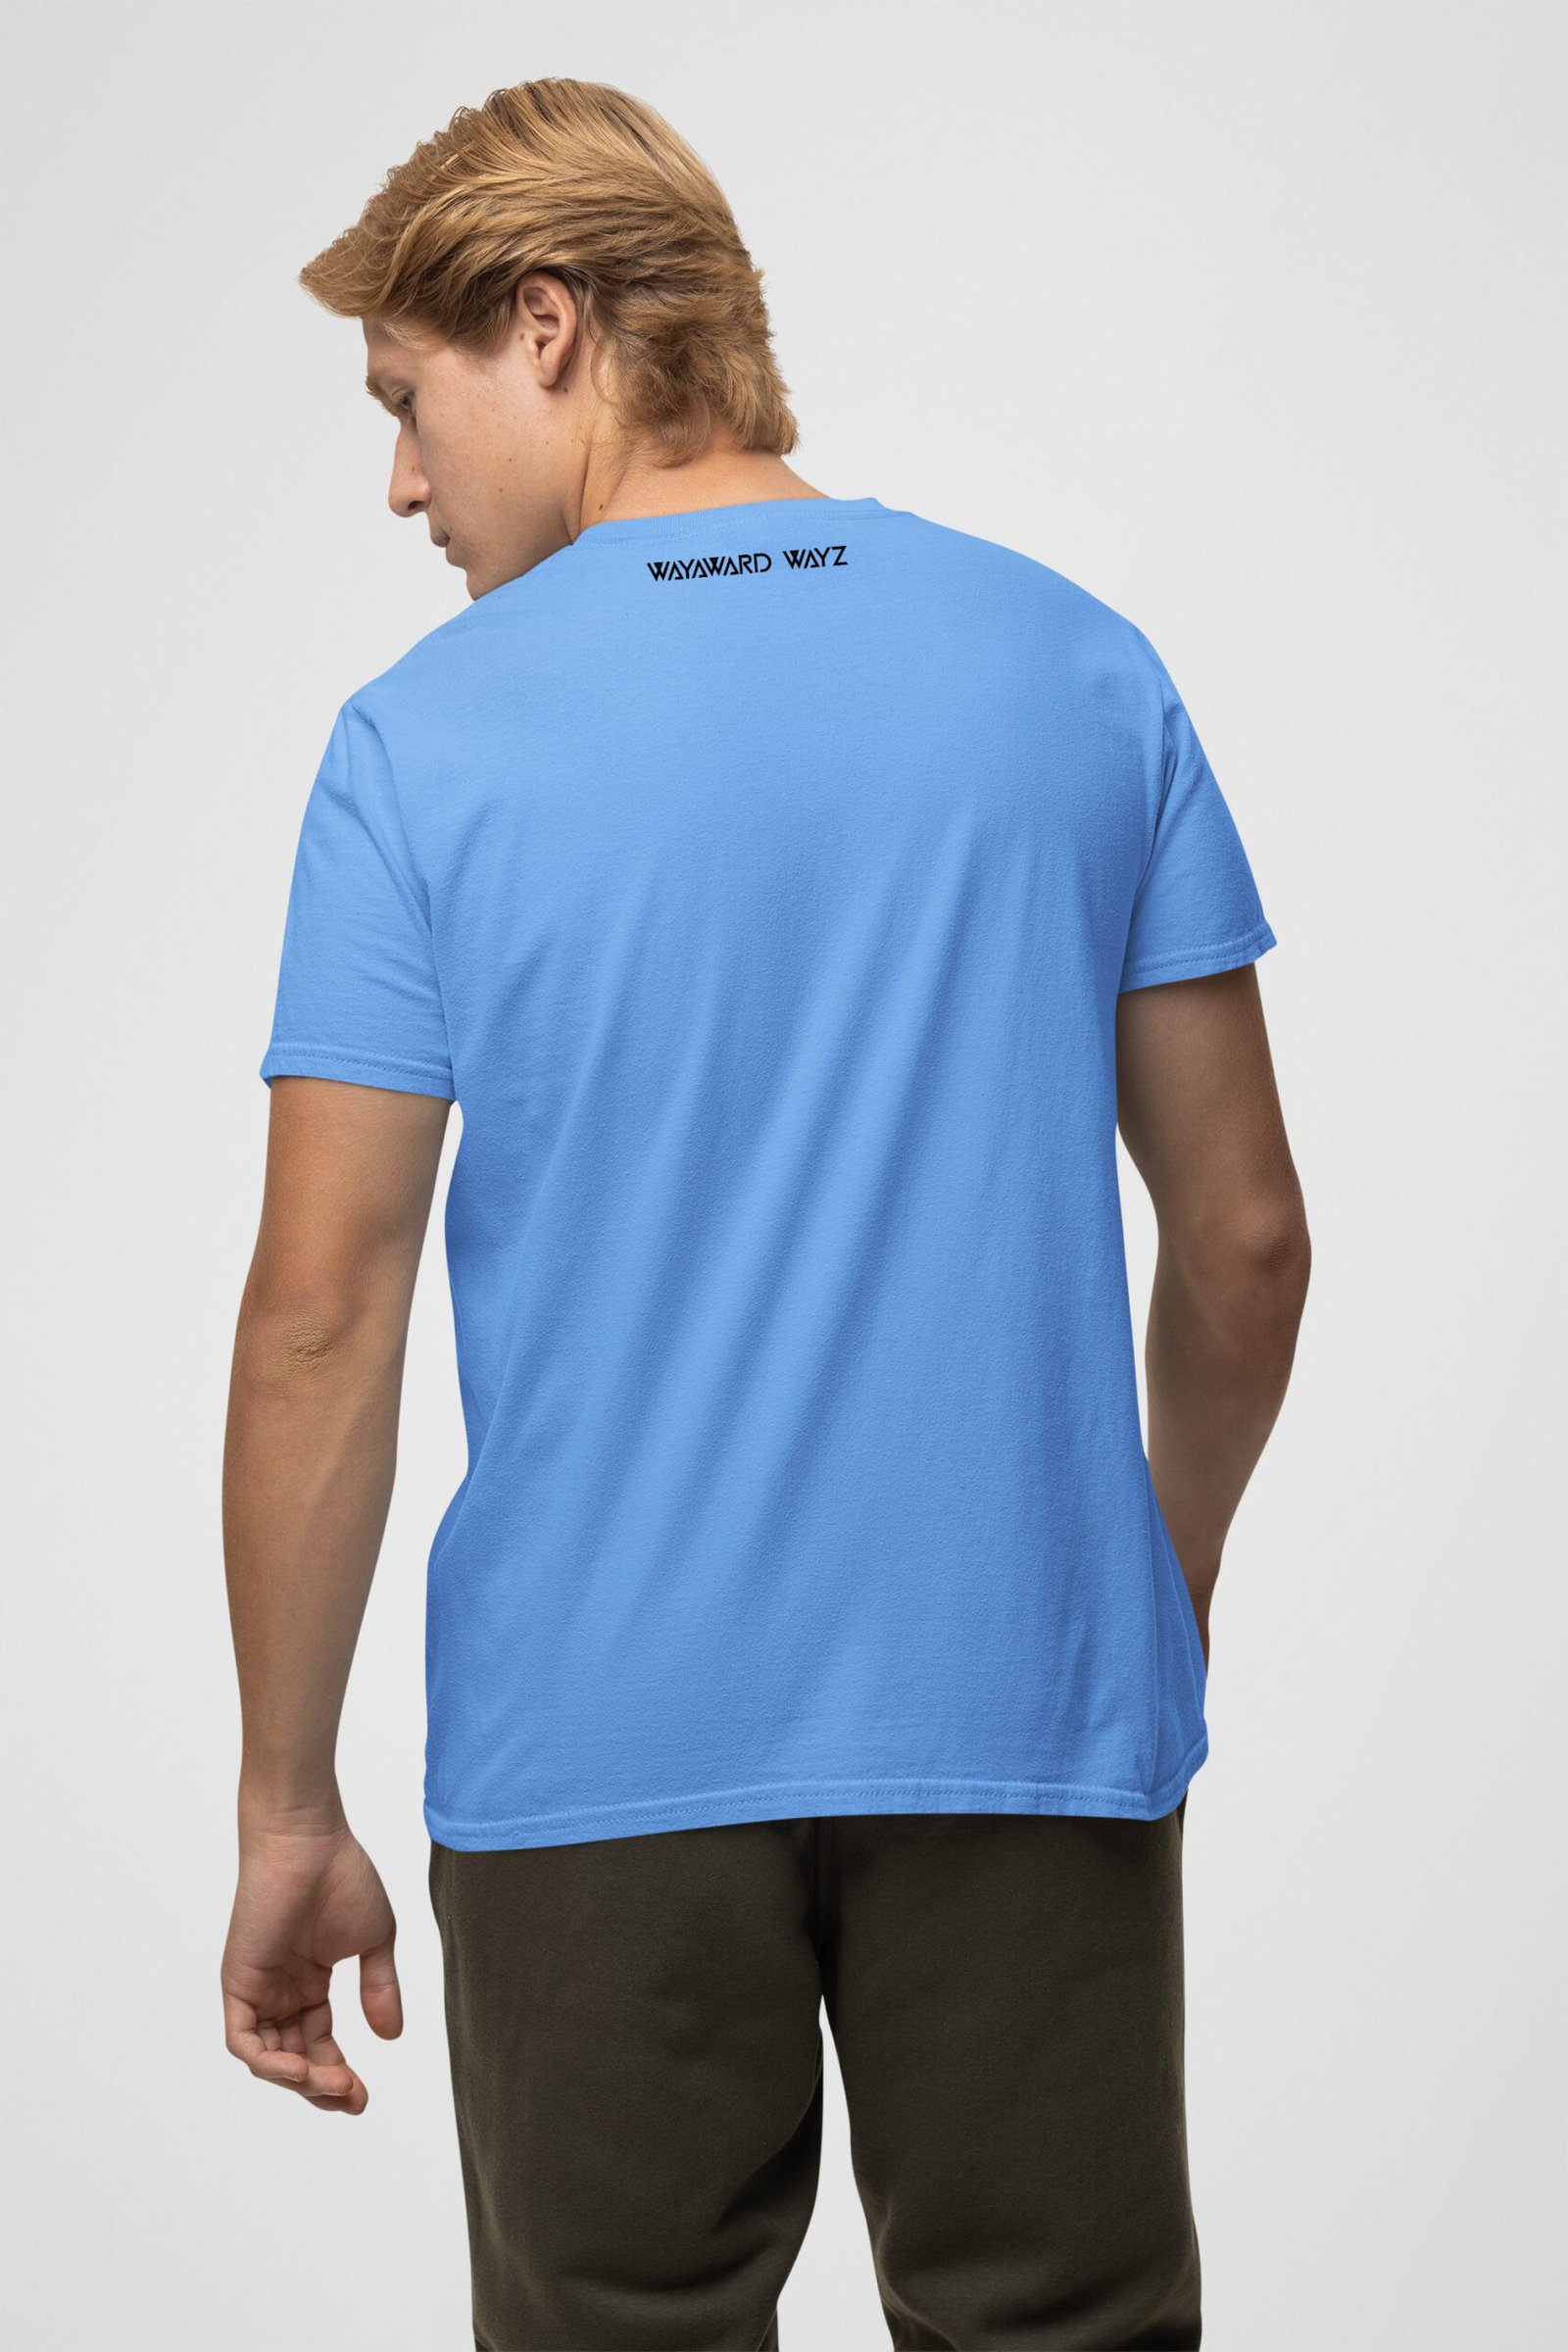 Wayward Wayz Solid T-Shirt Sky Blue-model back